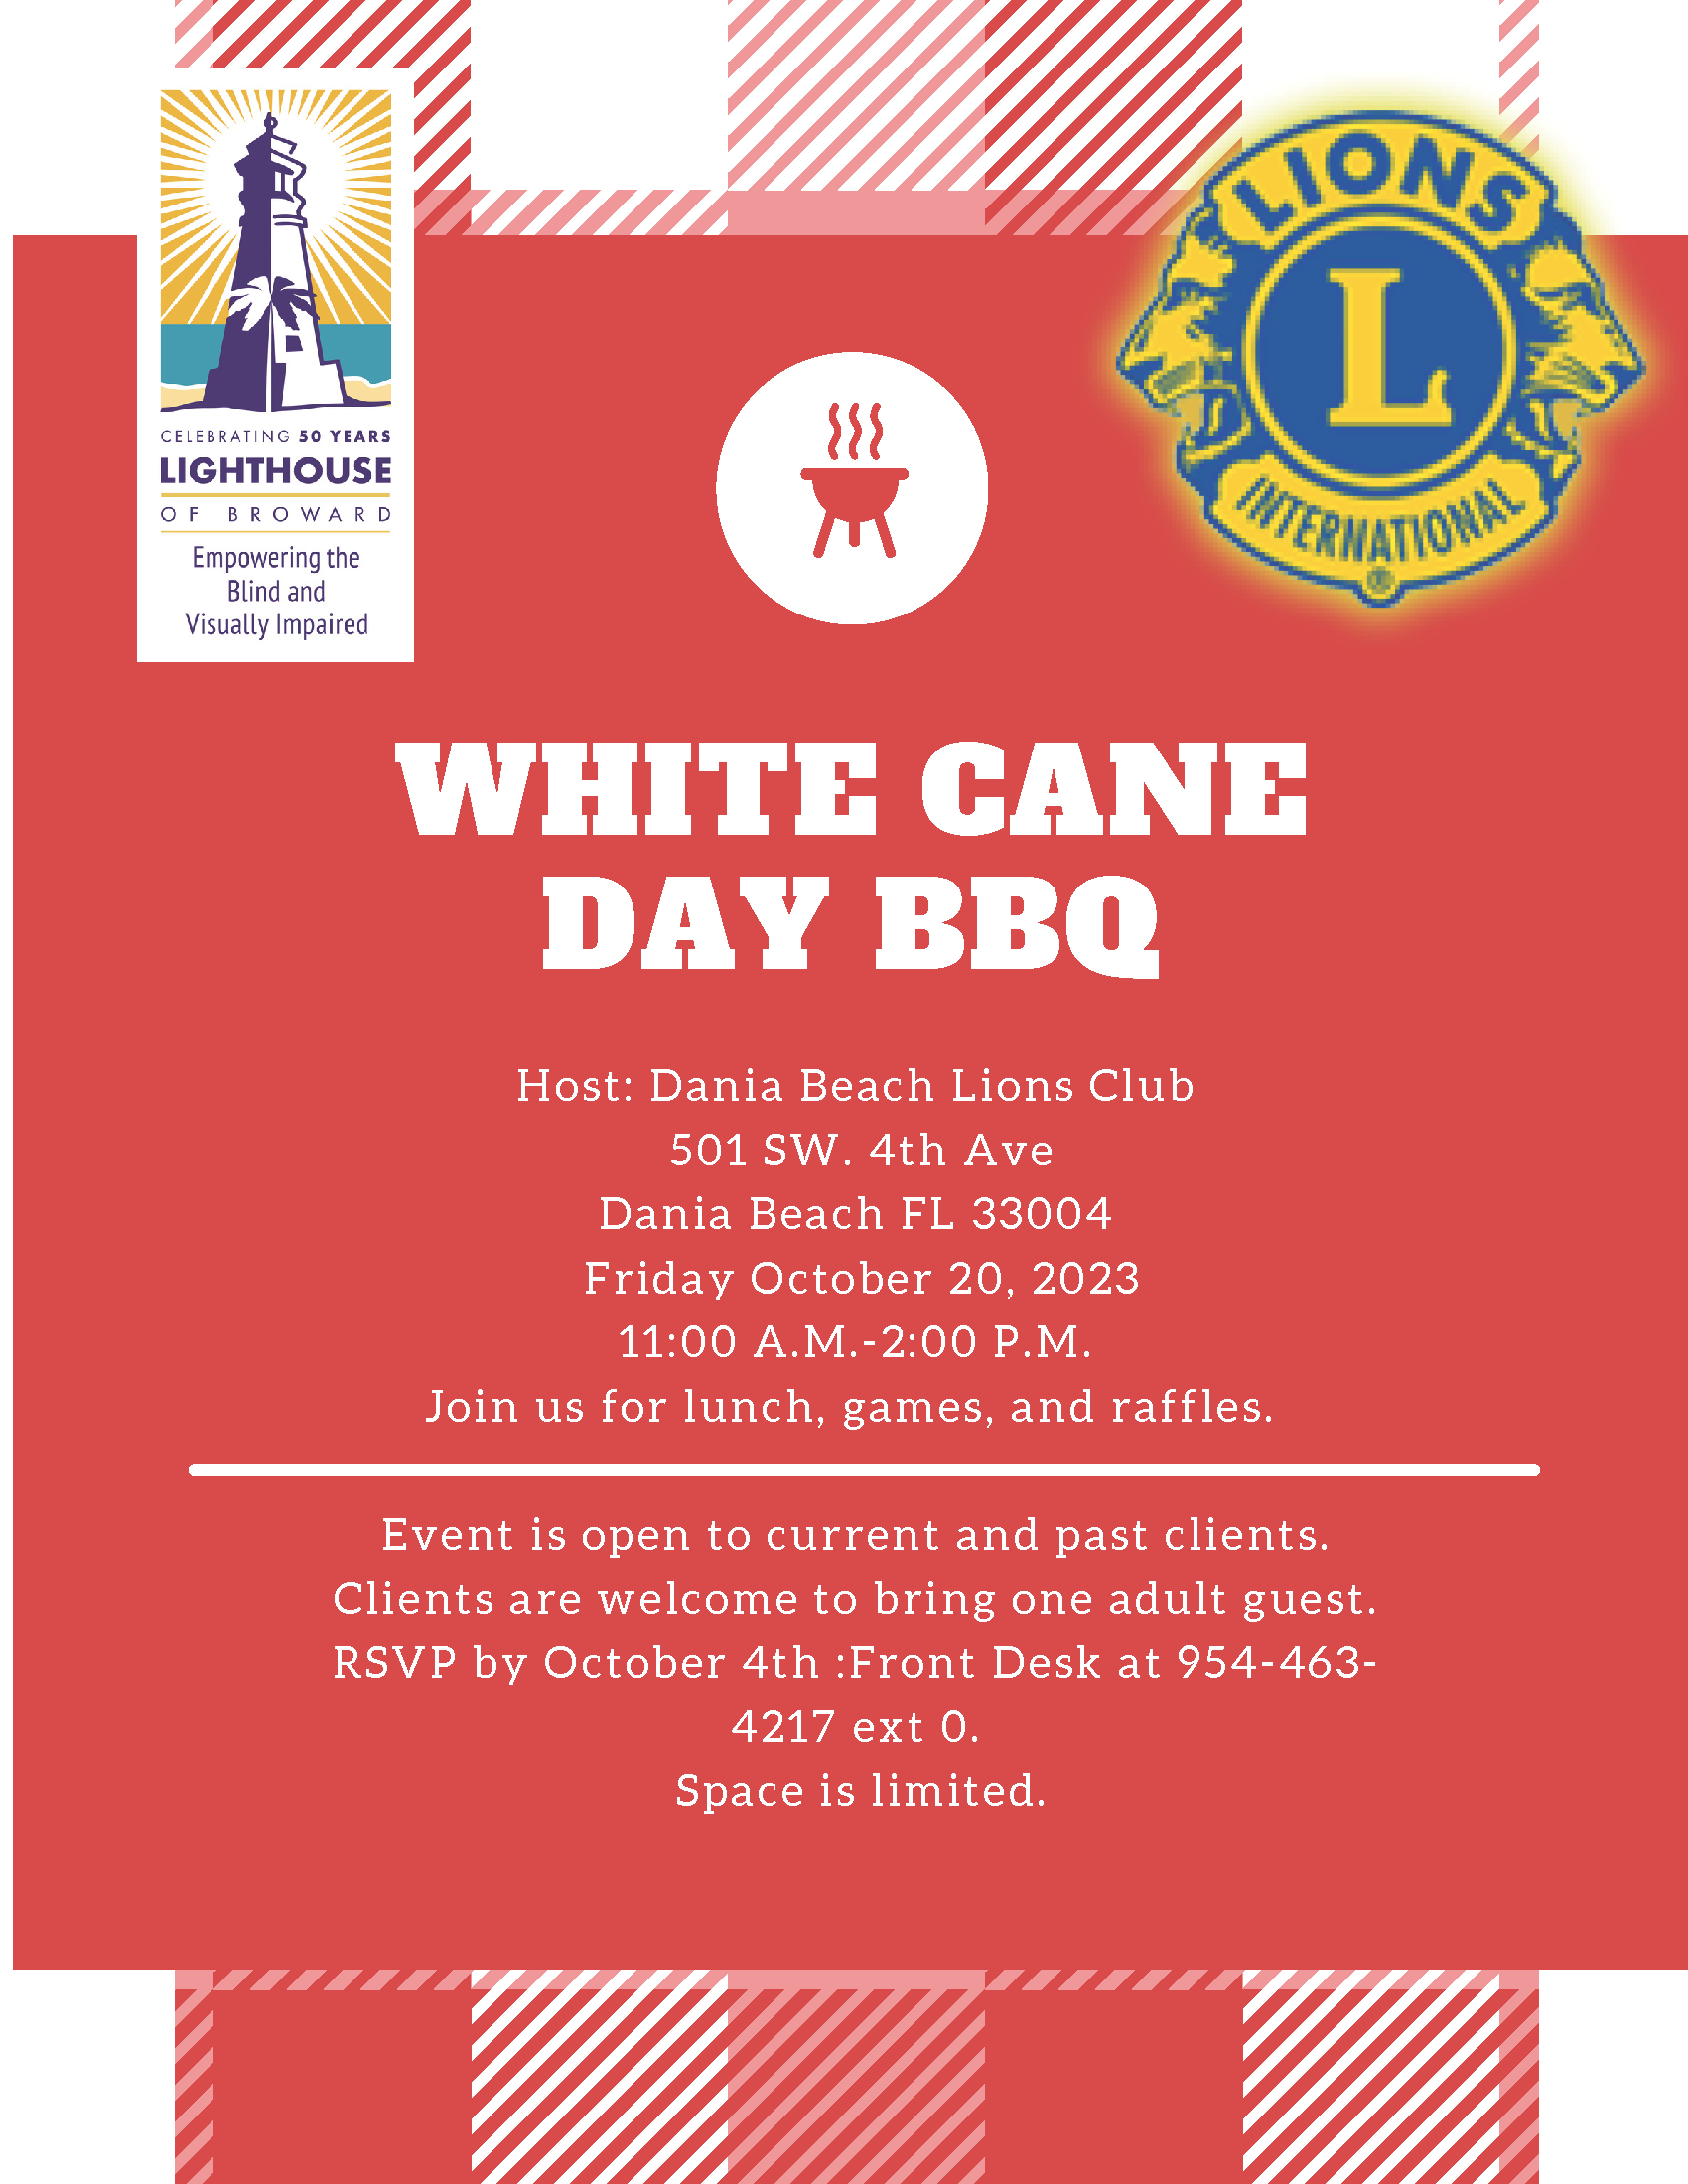 White cane day event logo